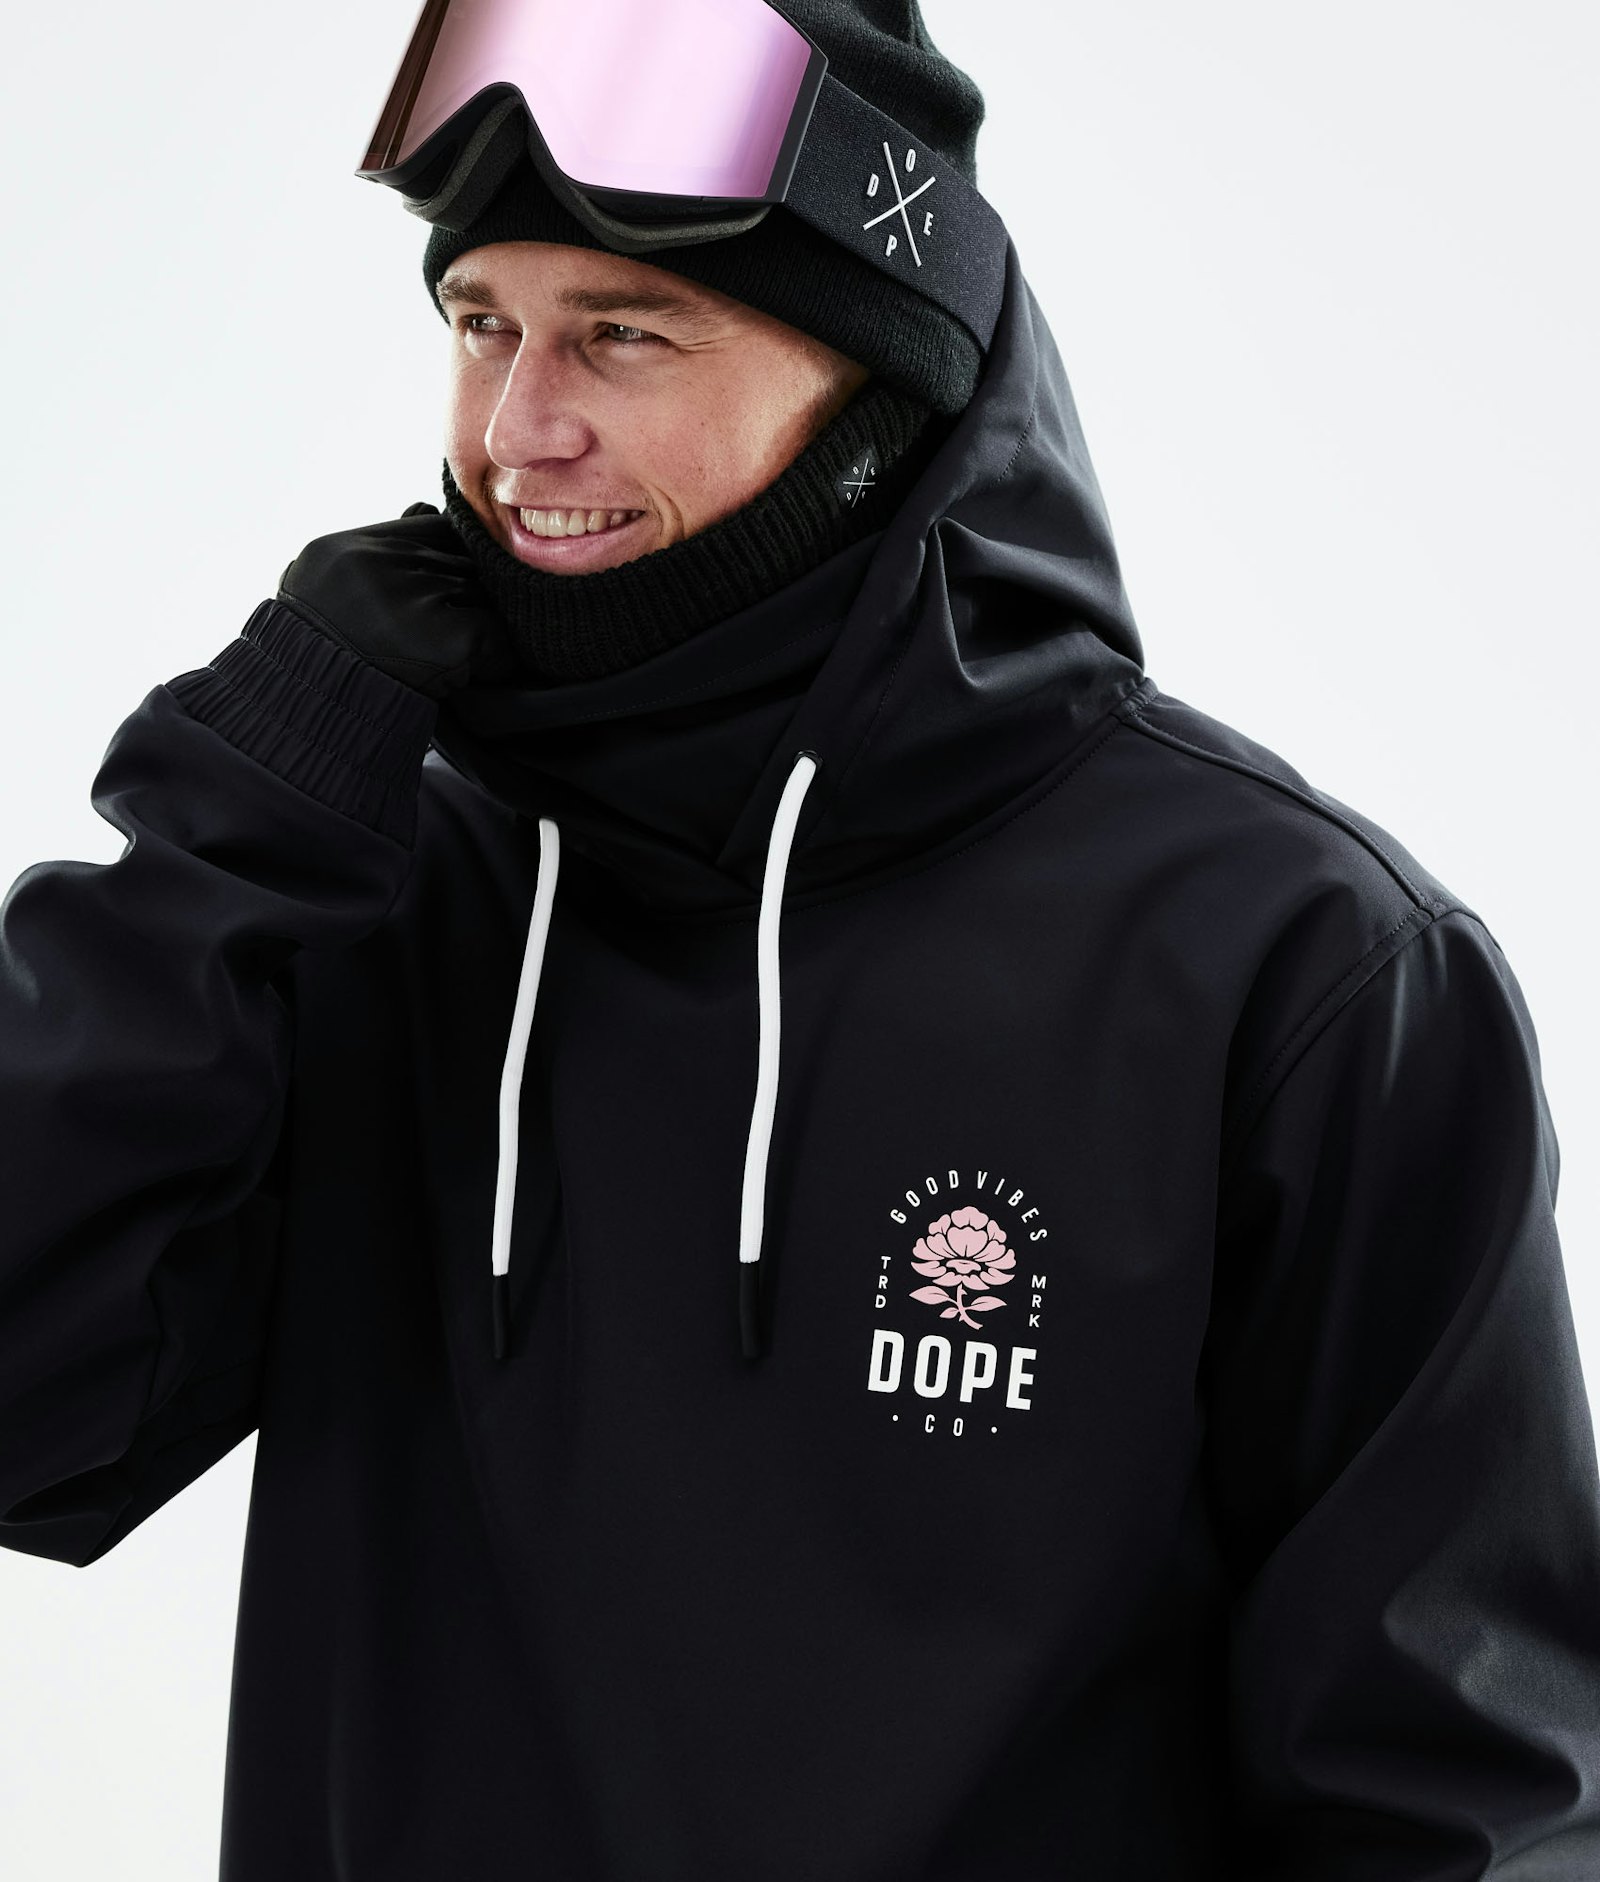 Dope Yeti 2021 Veste Snowboard Homme Rose Black